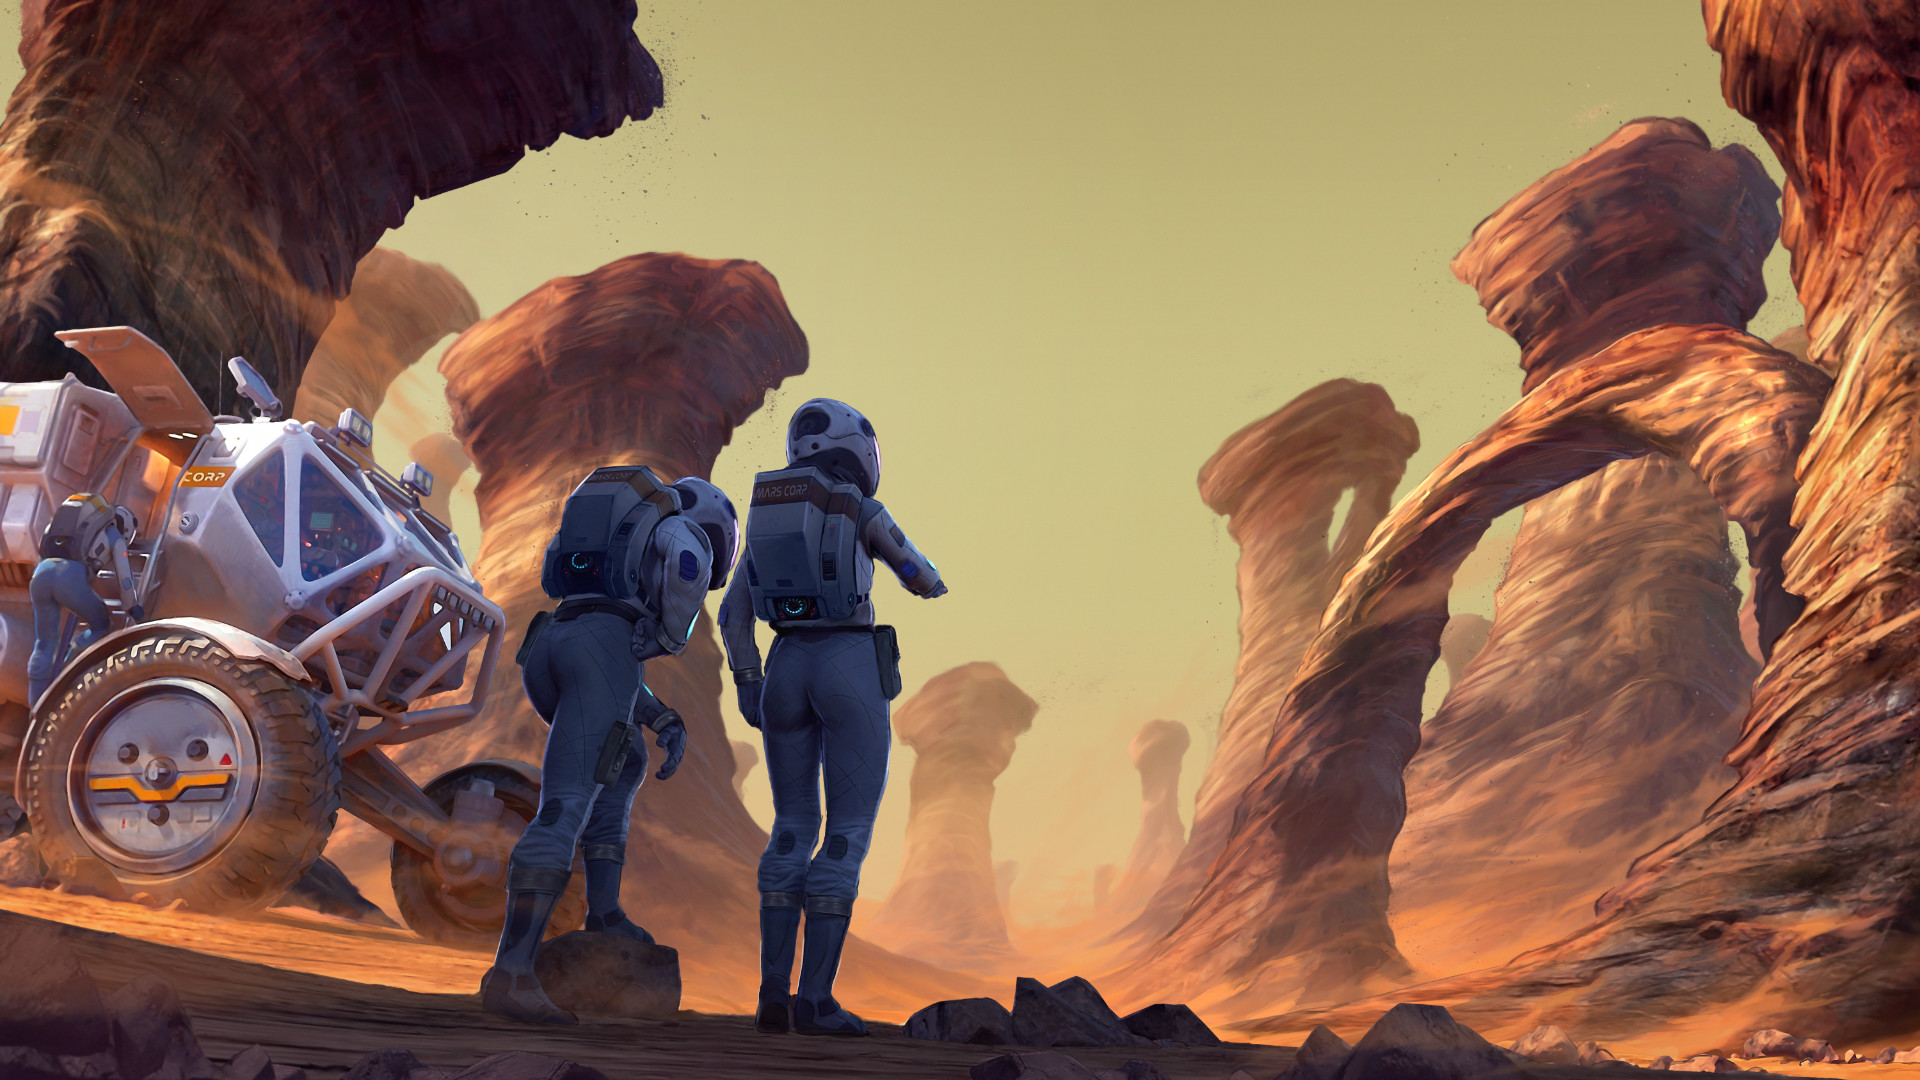 Terraformers screenshot